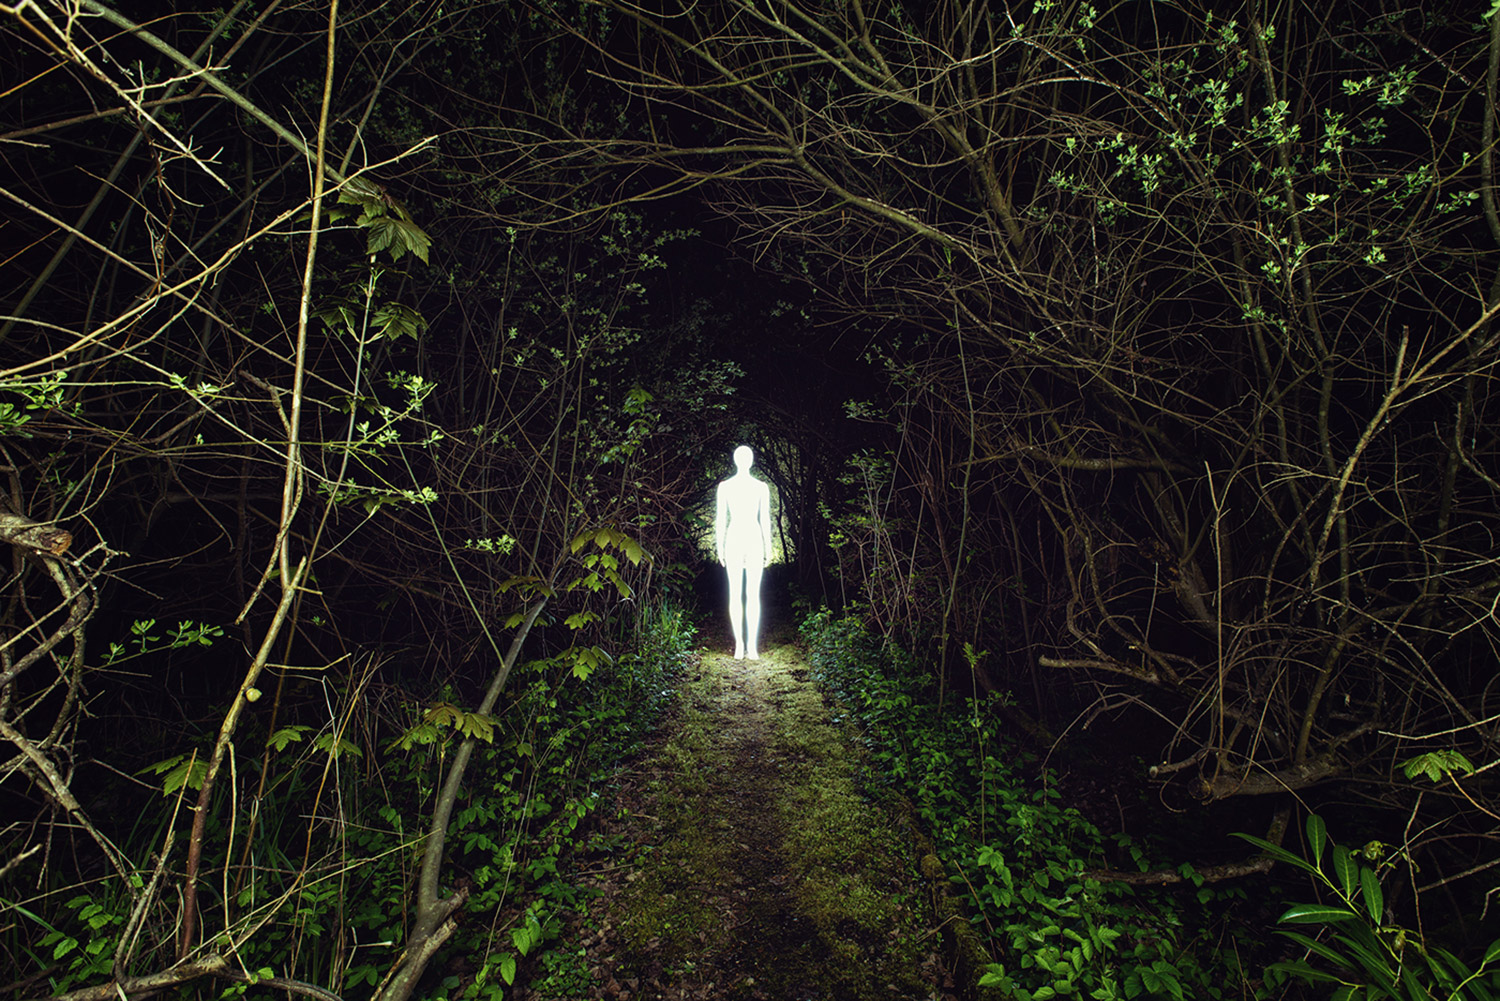 Severin Ettlin, HOMOLUX - illuminated body in forest